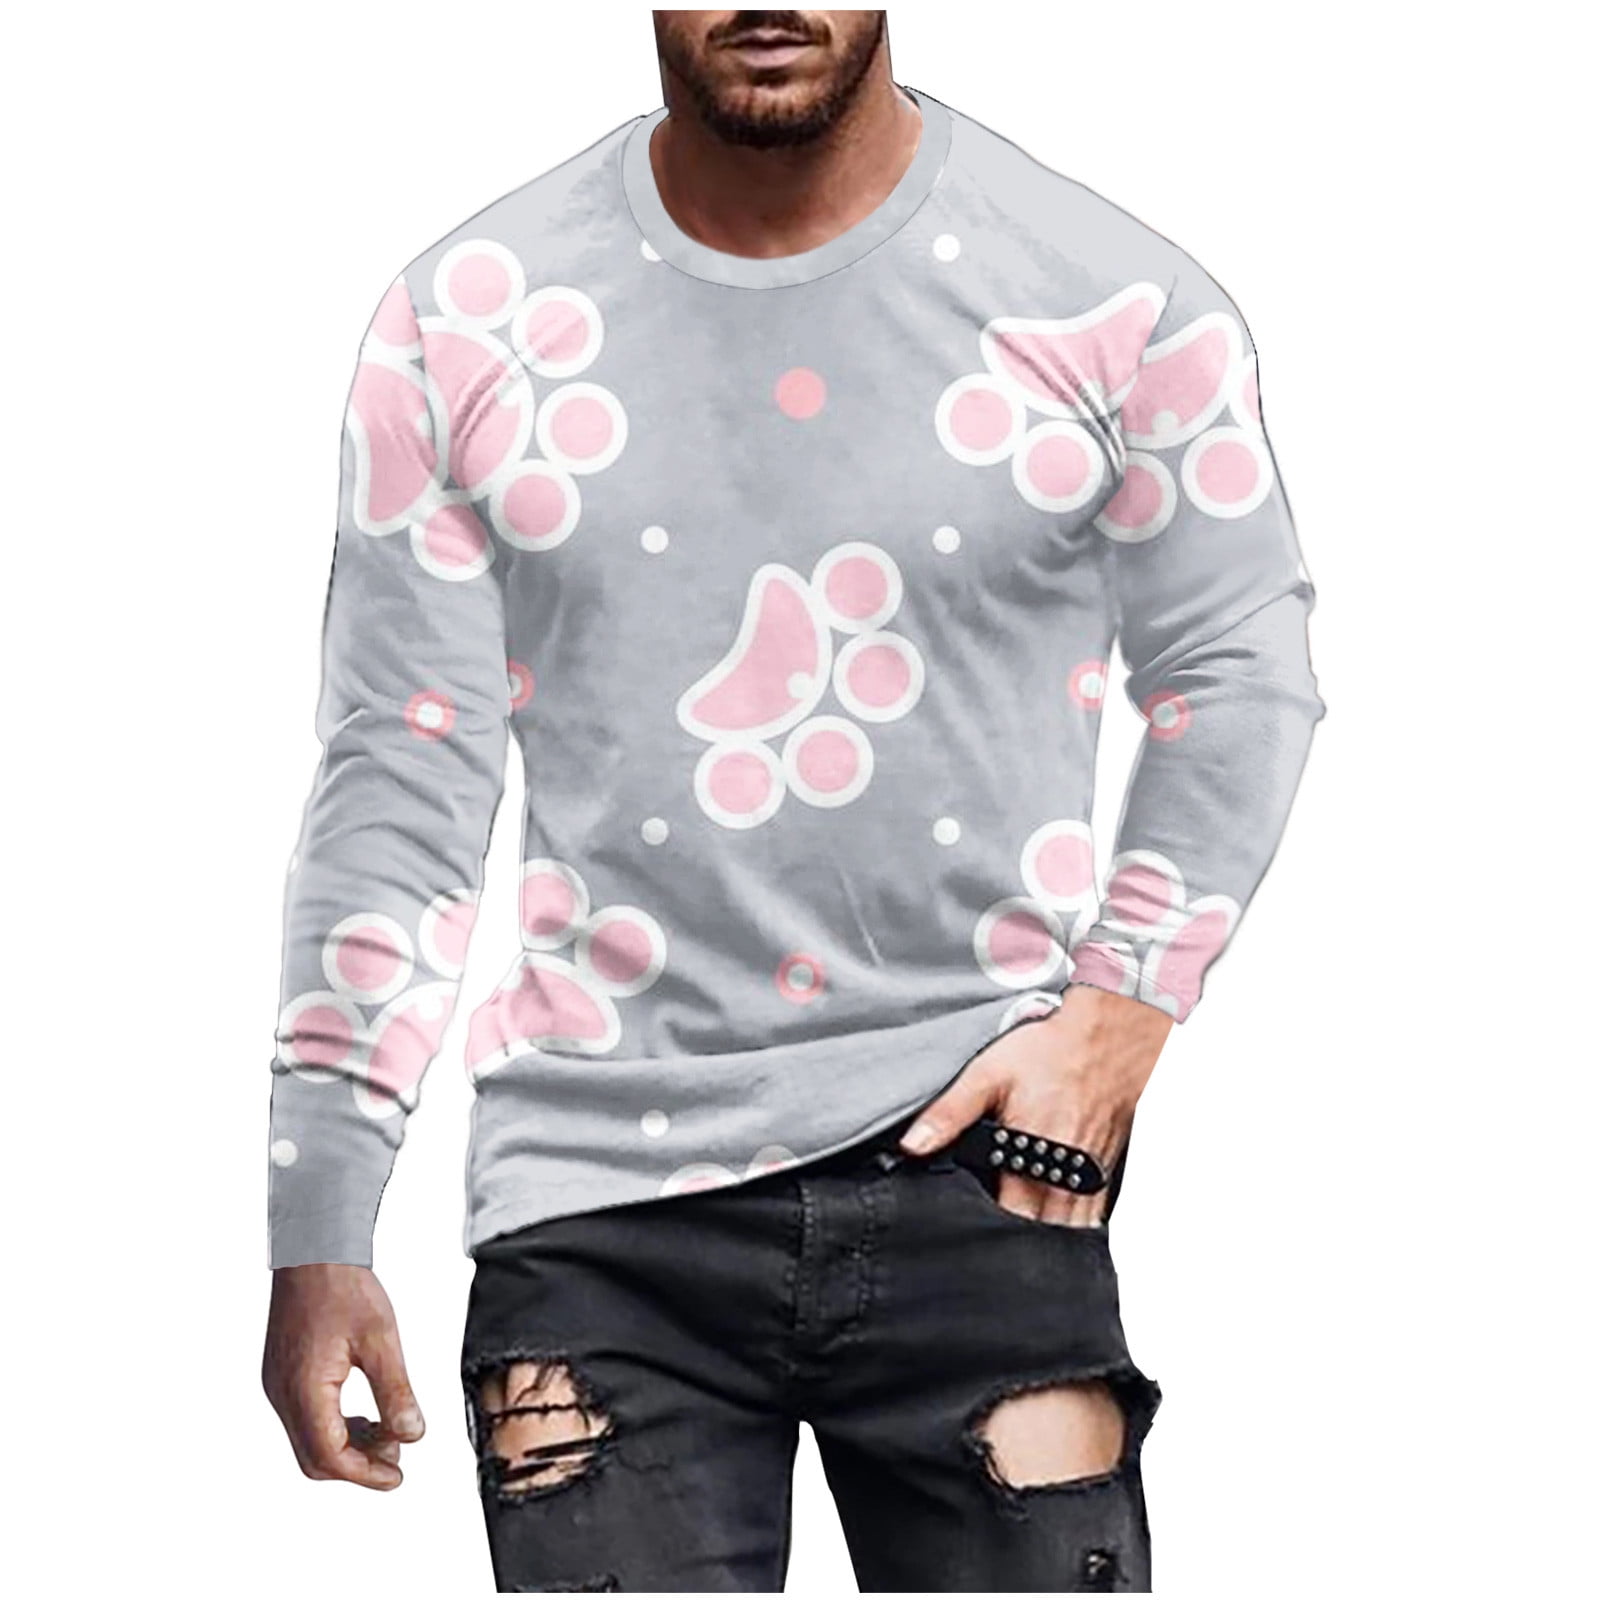 YYDGH T-Shirt for Men's Long Sleeve Fashion Tops 3D Paw Print